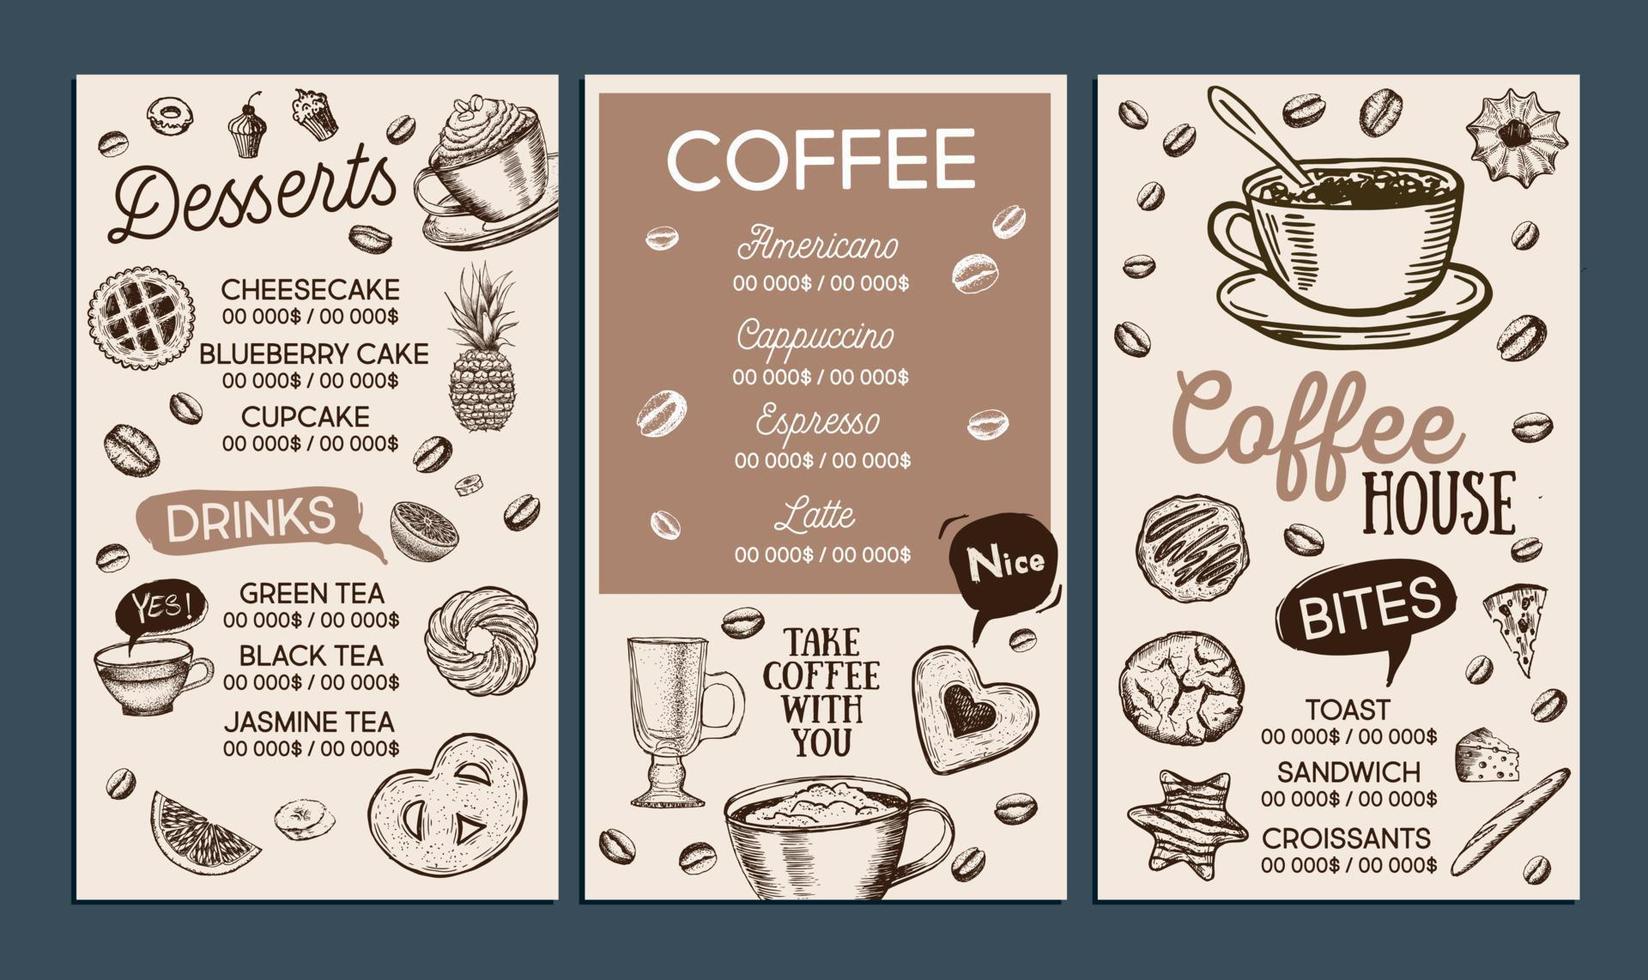 Coffee house menu. Restaurant cafe menu, template design. vector